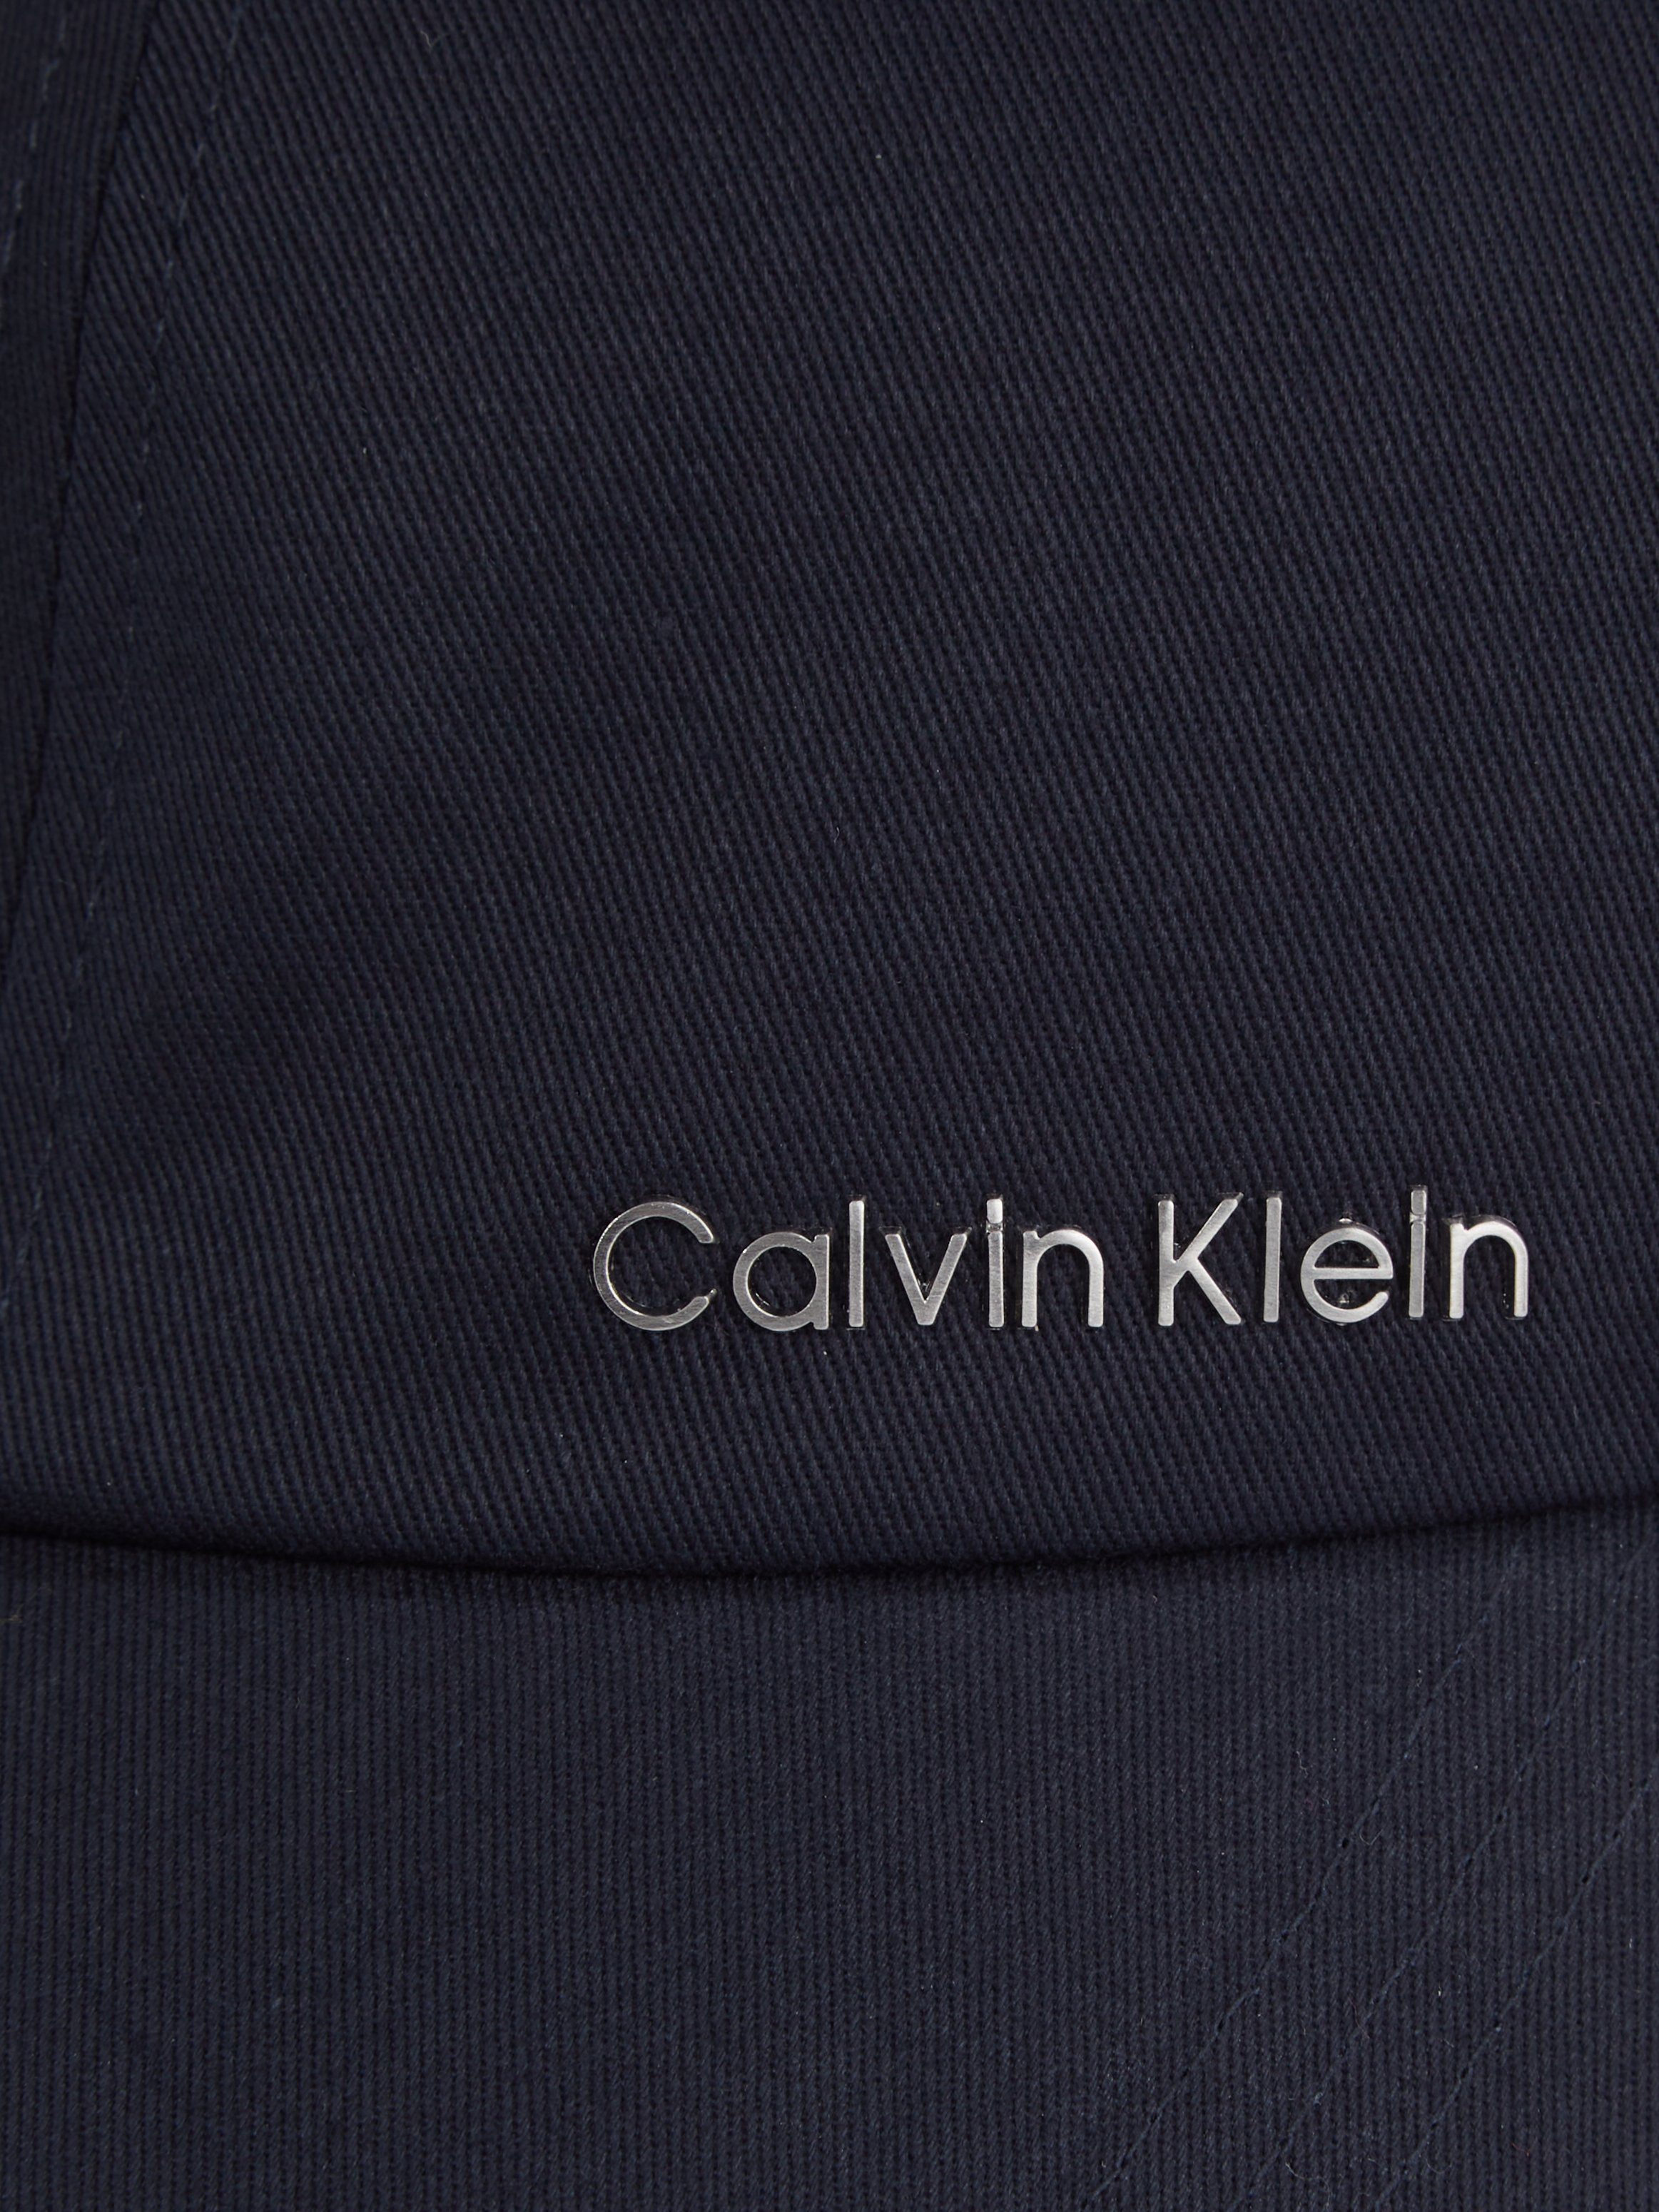 LETTERING CAP Ck BB Cap Calvin Baseball Klein Navy METAL